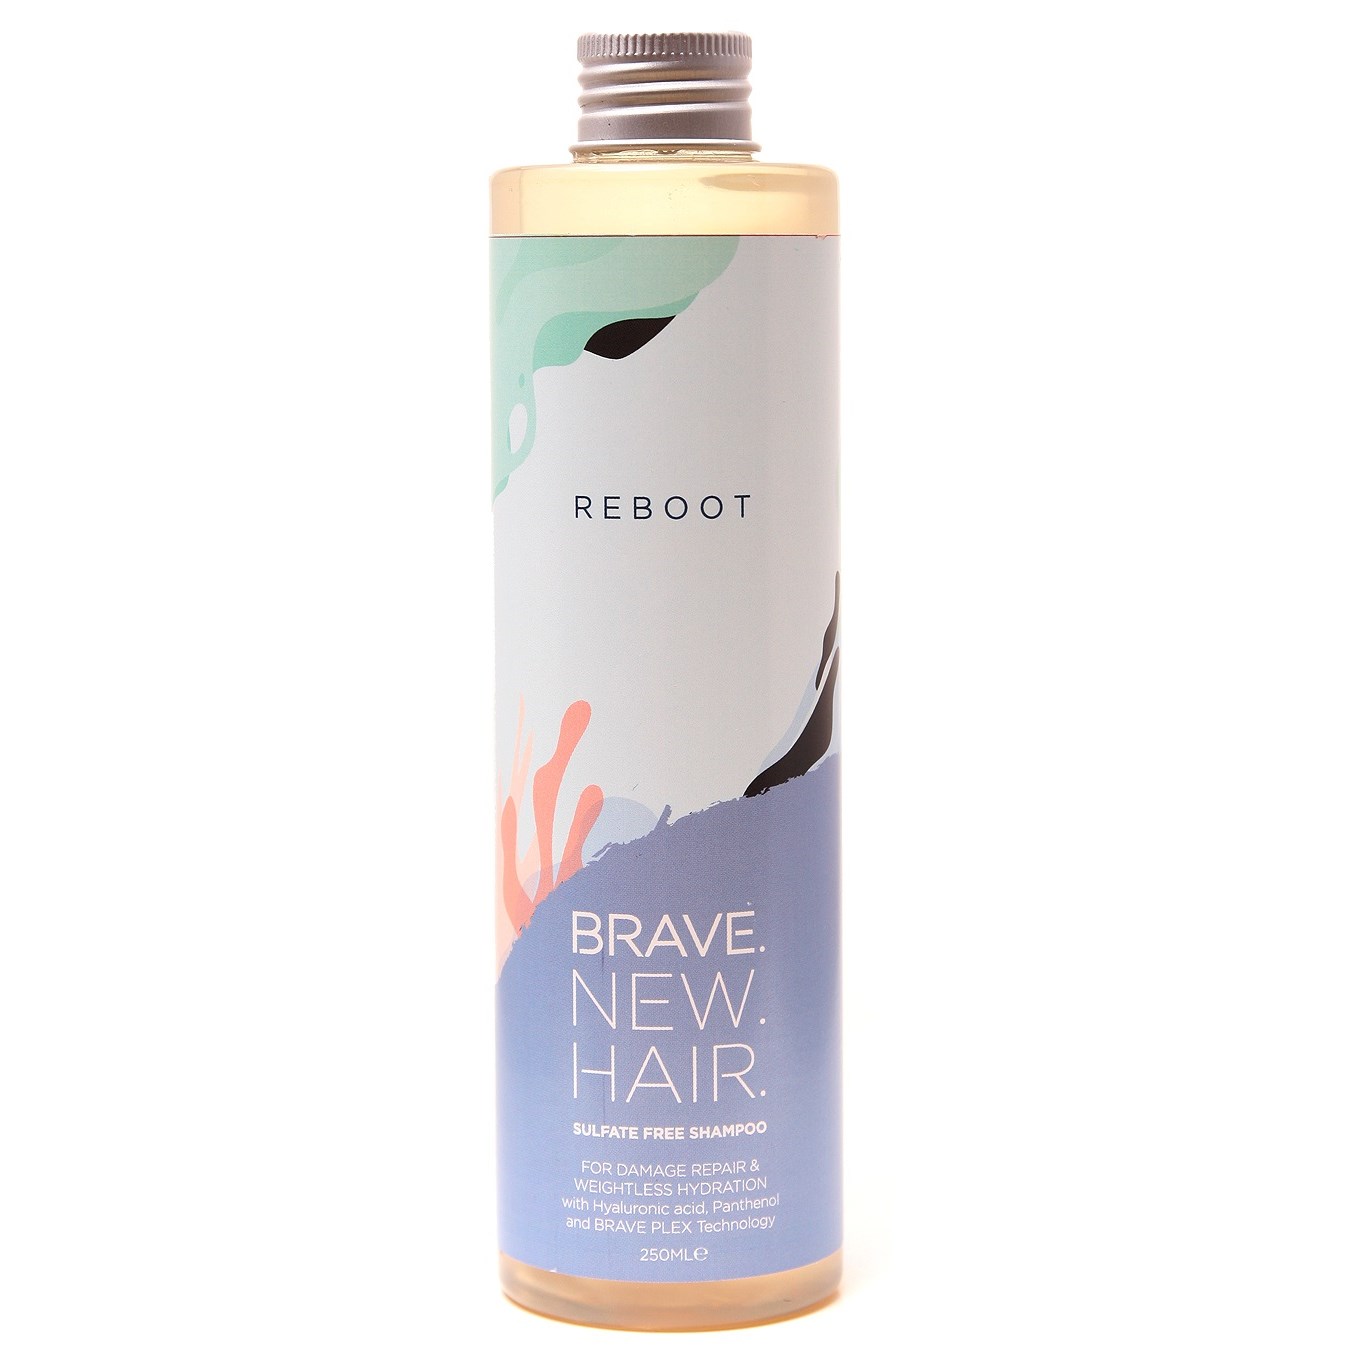 Brave. New. Hair. Reboot Shampoo 250ml